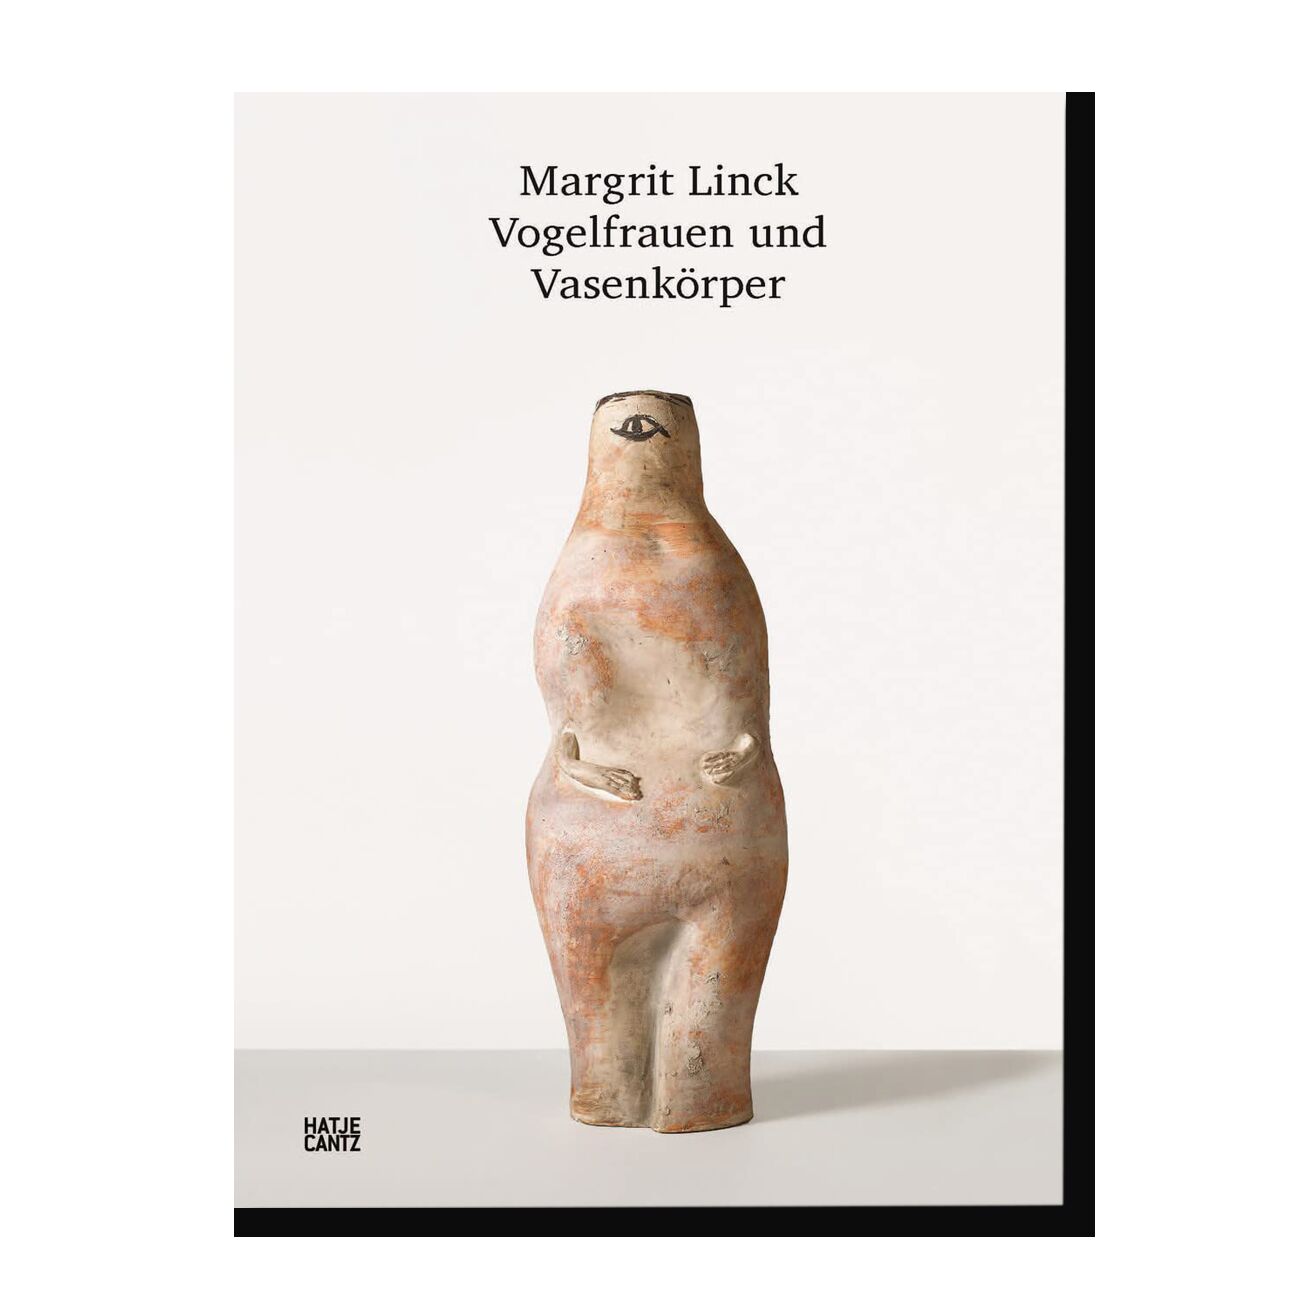 Margrit Linck. Bird Women and Vase Bodies